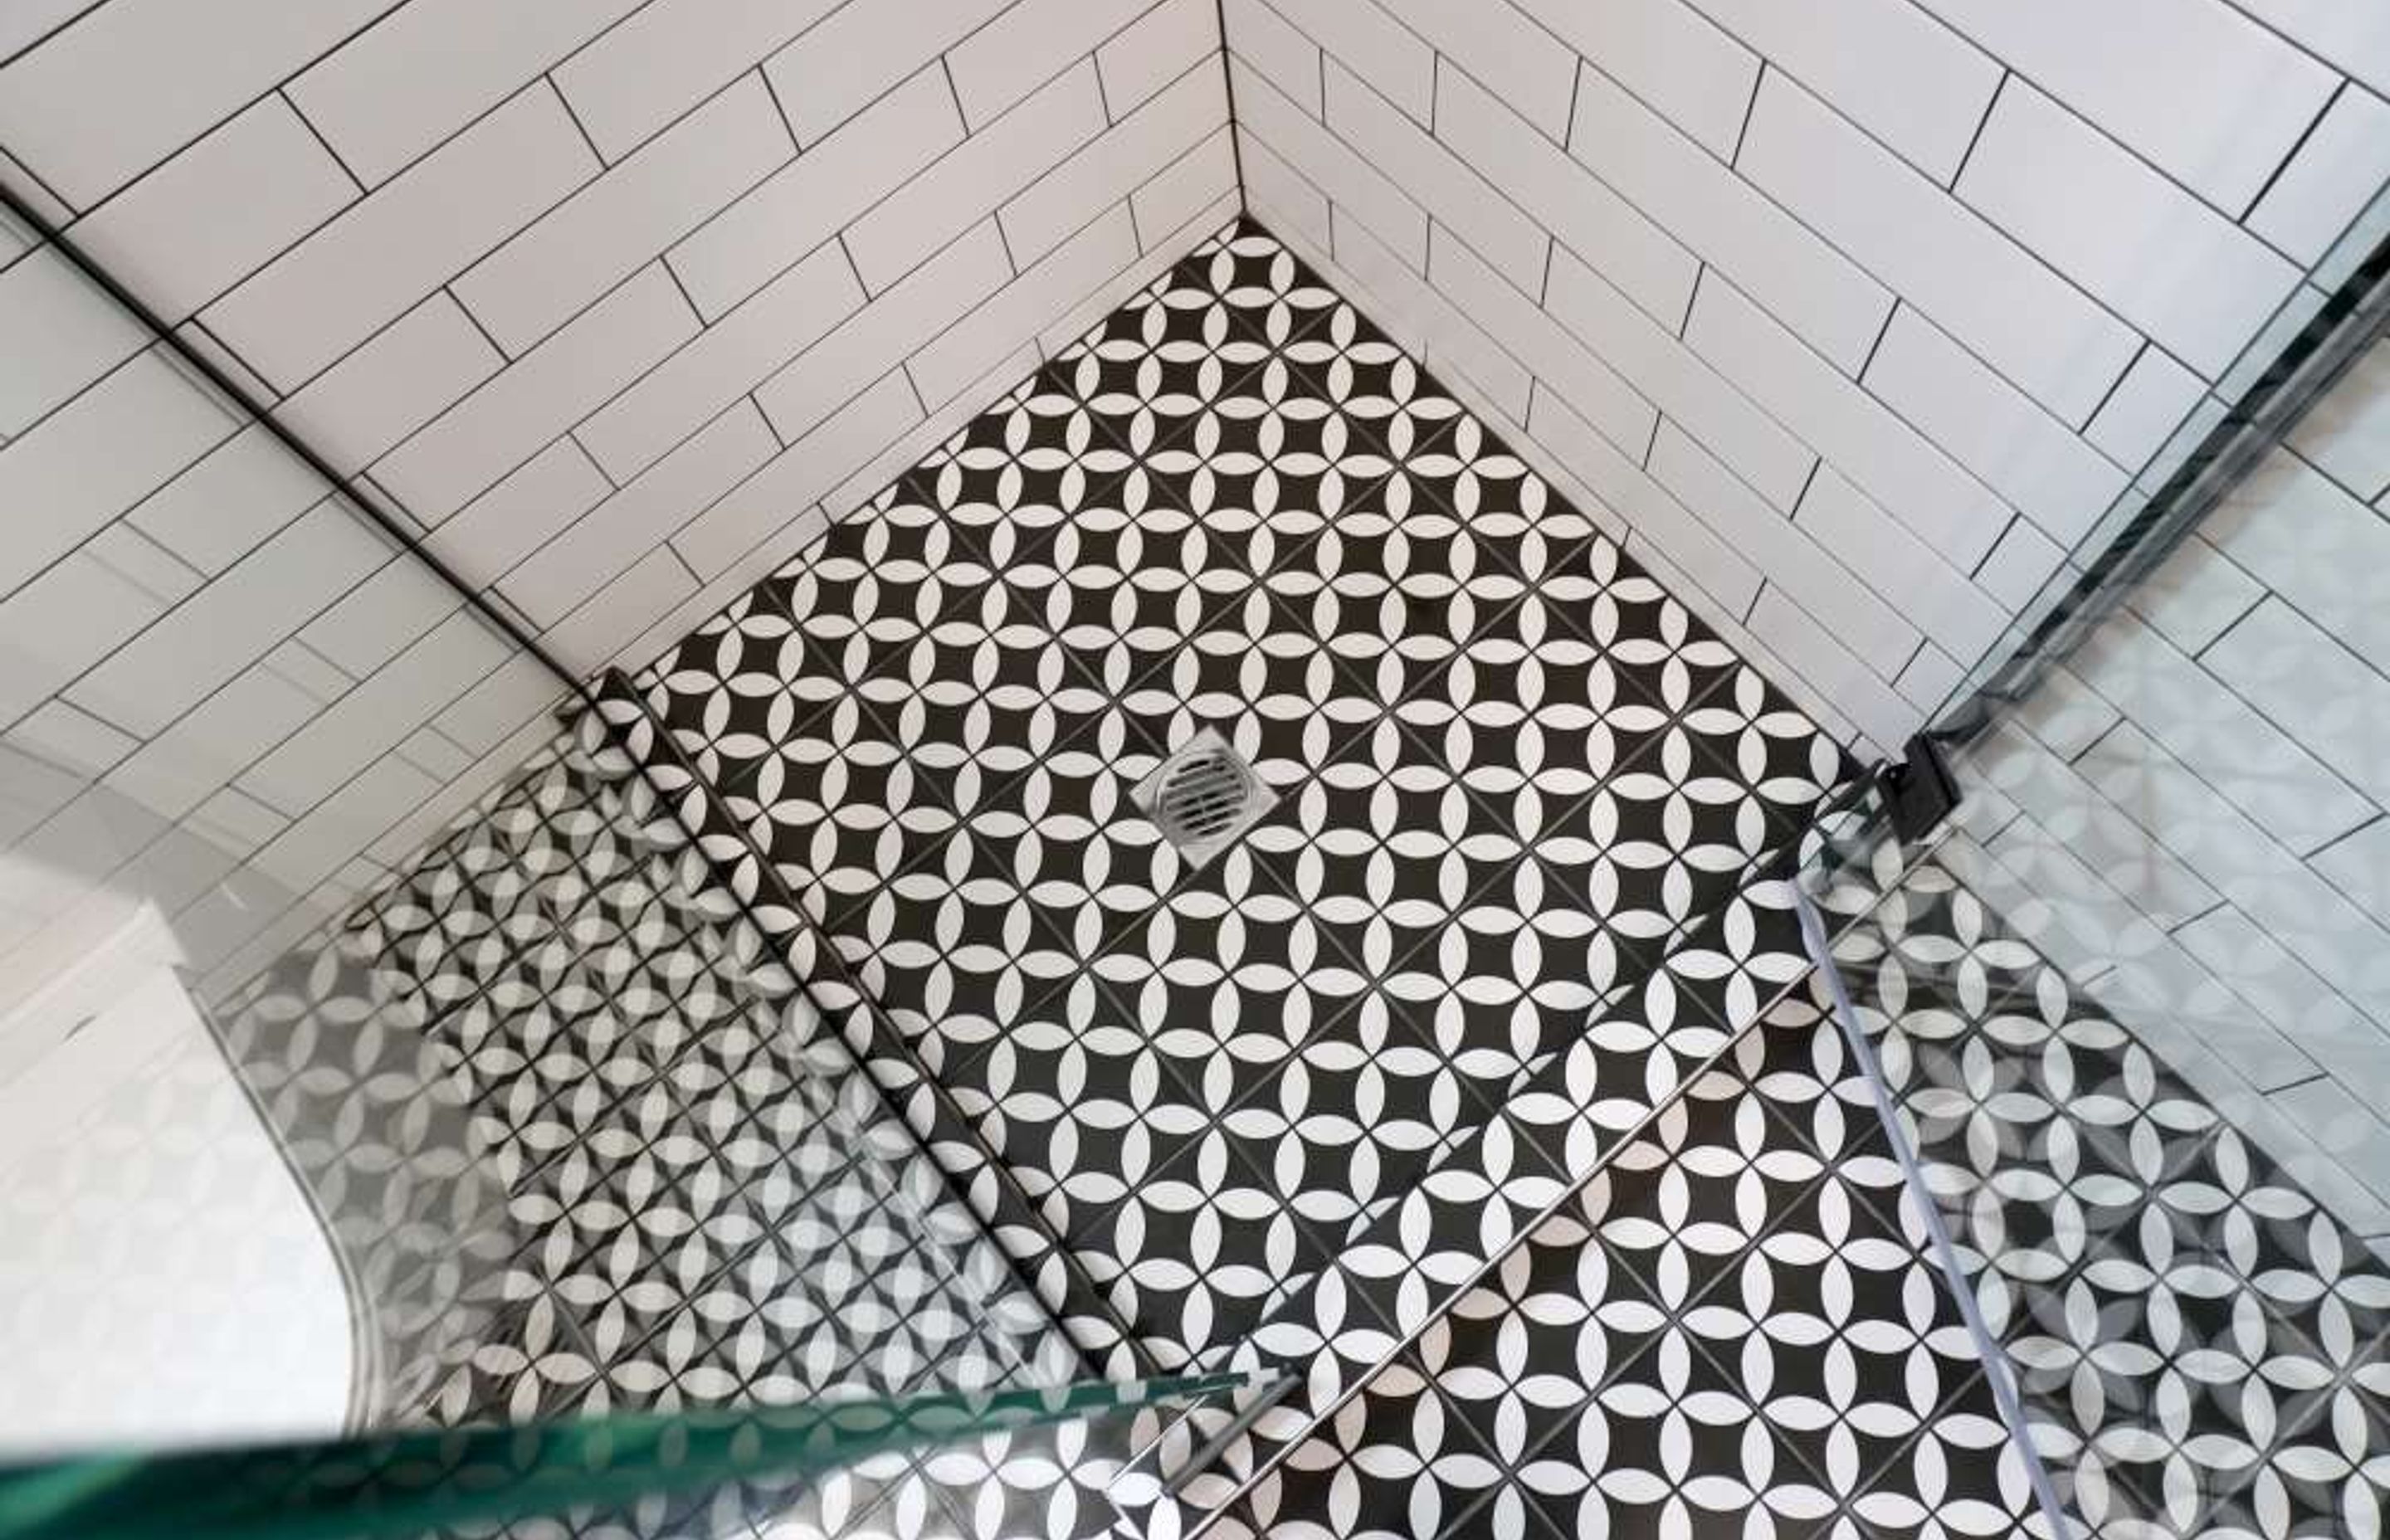 Contemporary Artisan Bathroom Renovation